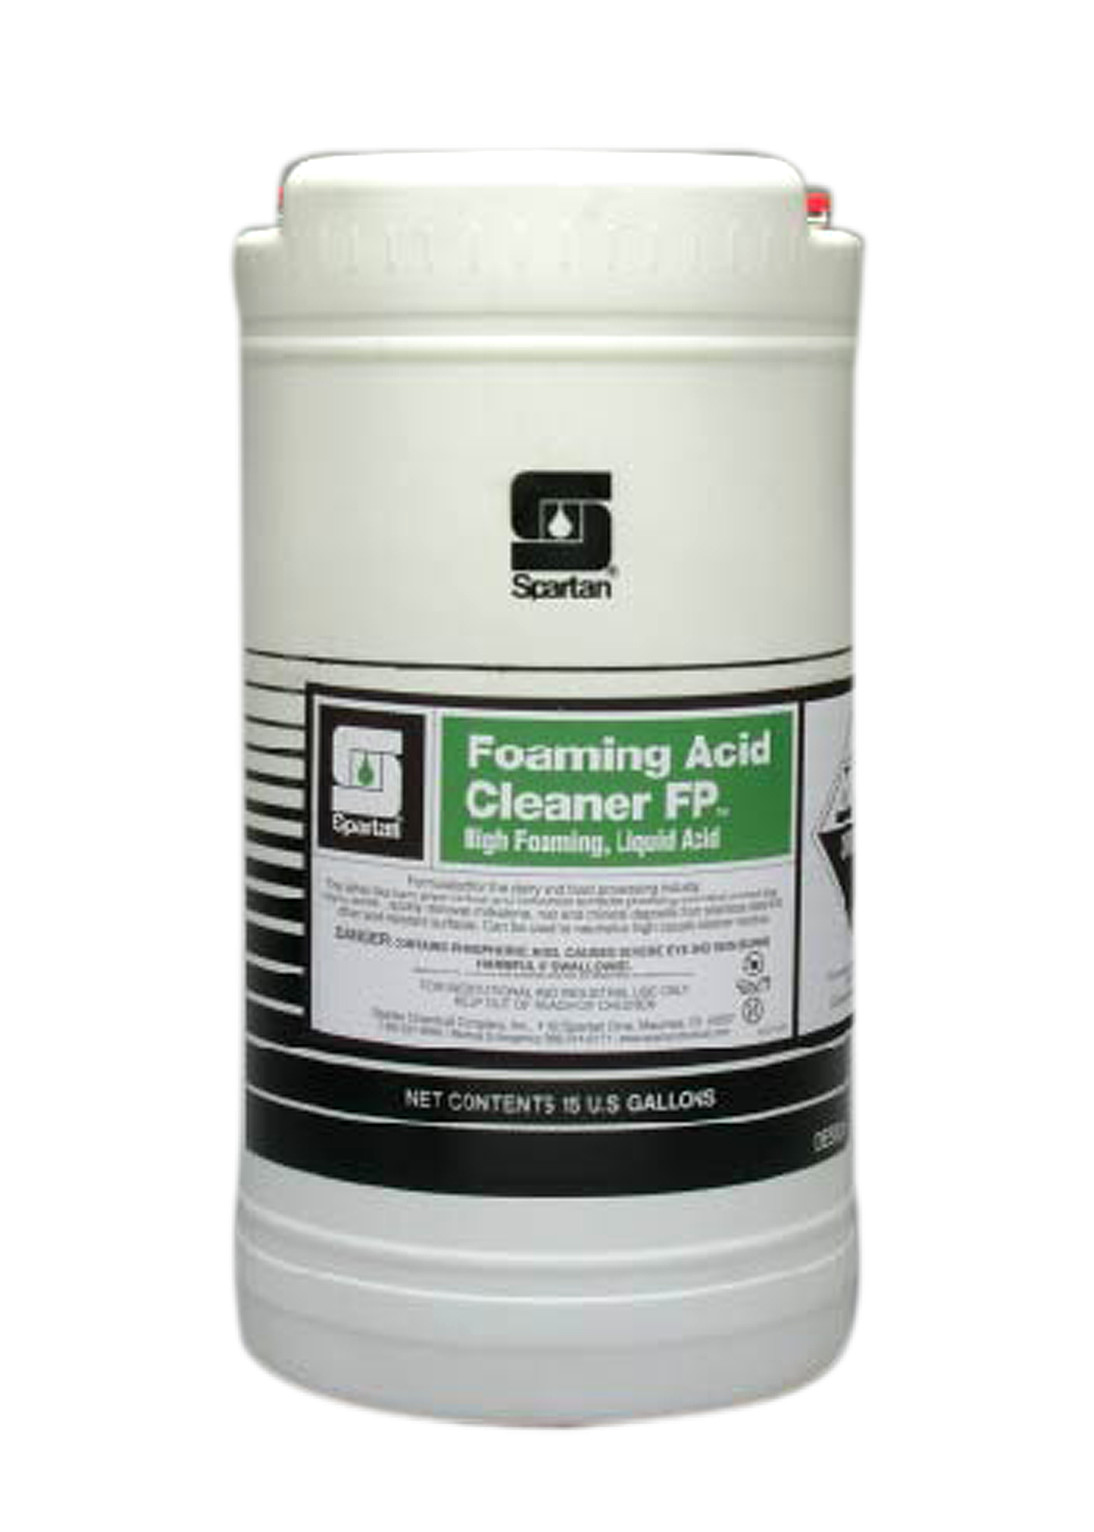 Spartan Chemical Company Foaming Acid Cleaner FP, 15 GAL DRUM